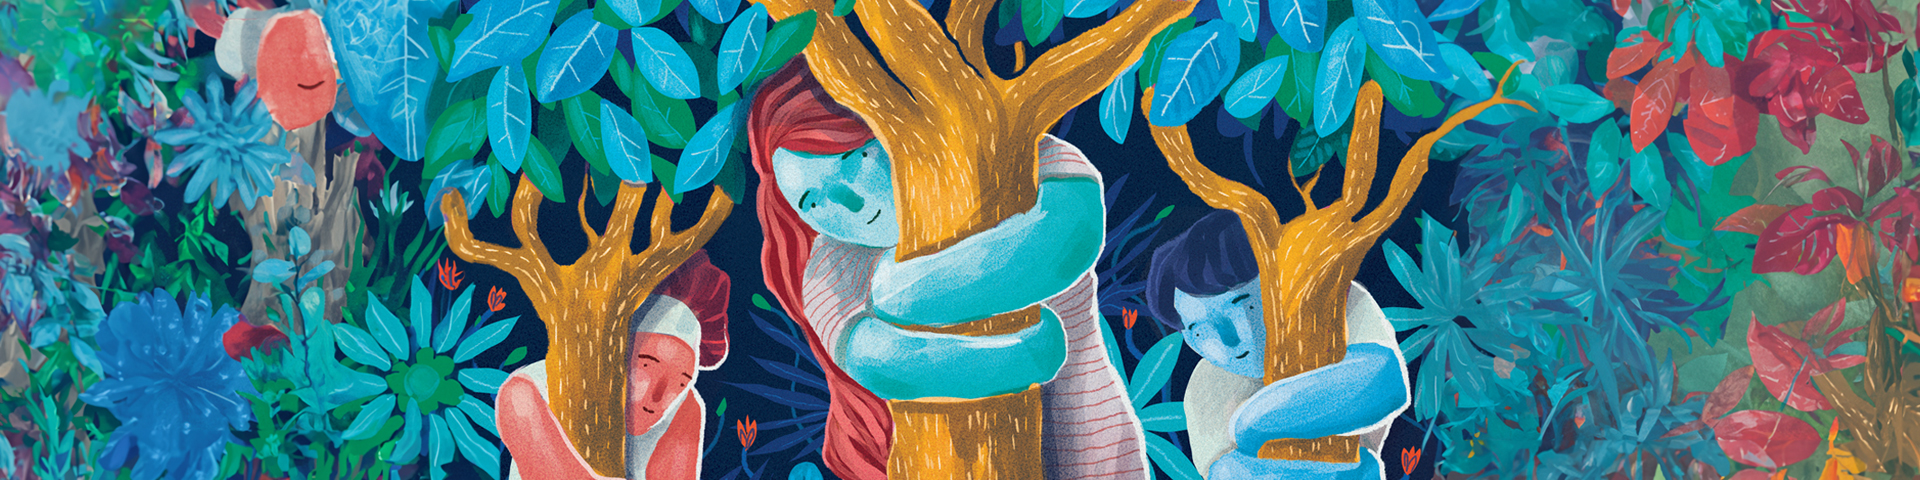 Colorida ilustración de tres figuras abrazando árboles.